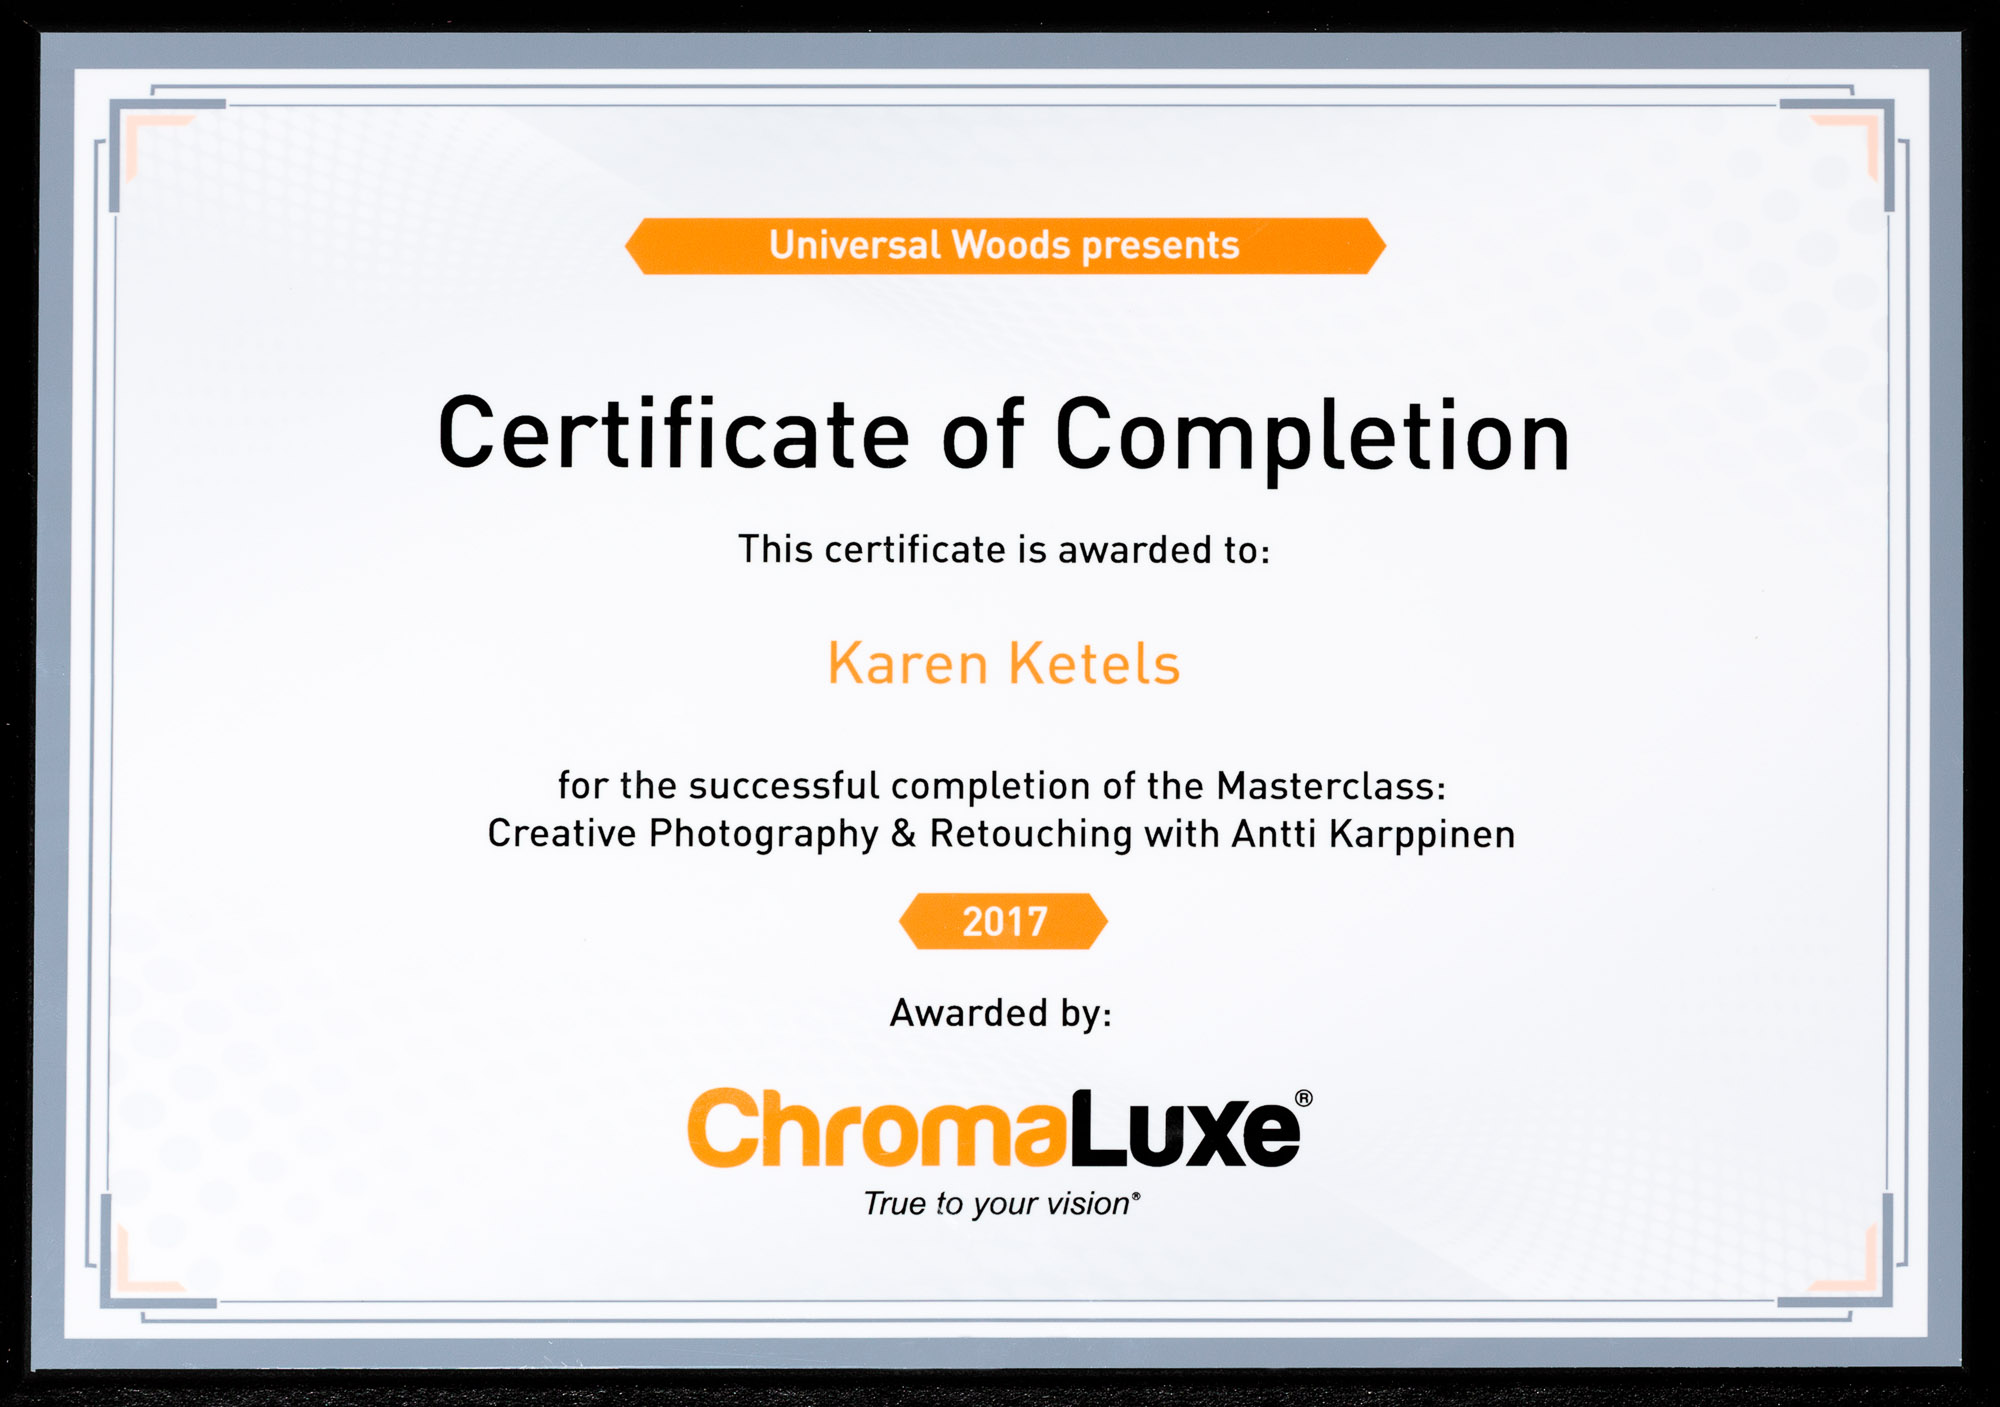 Karen Ketels award Chromaluxe, Masterclass Creative Photography & Retouching with Antti Karppinen